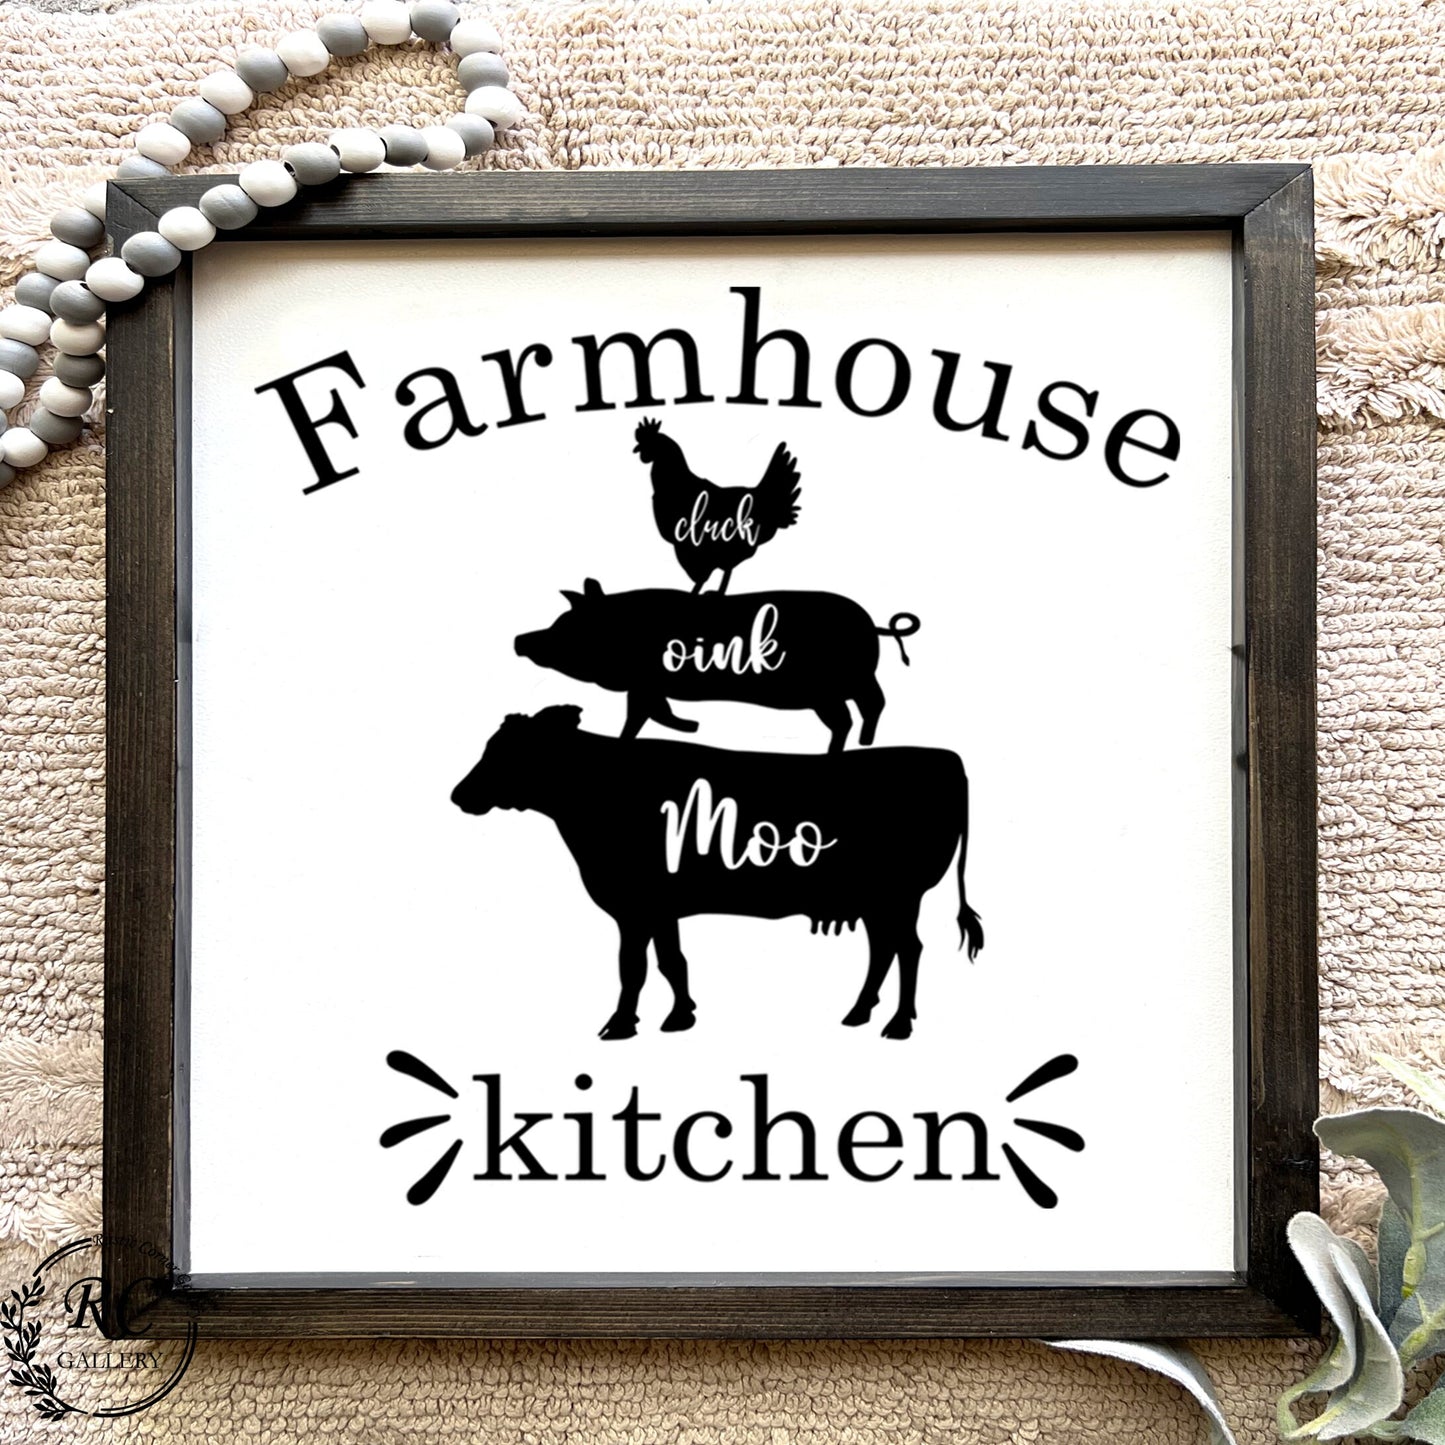 Farmhouse kitchen wood sign.